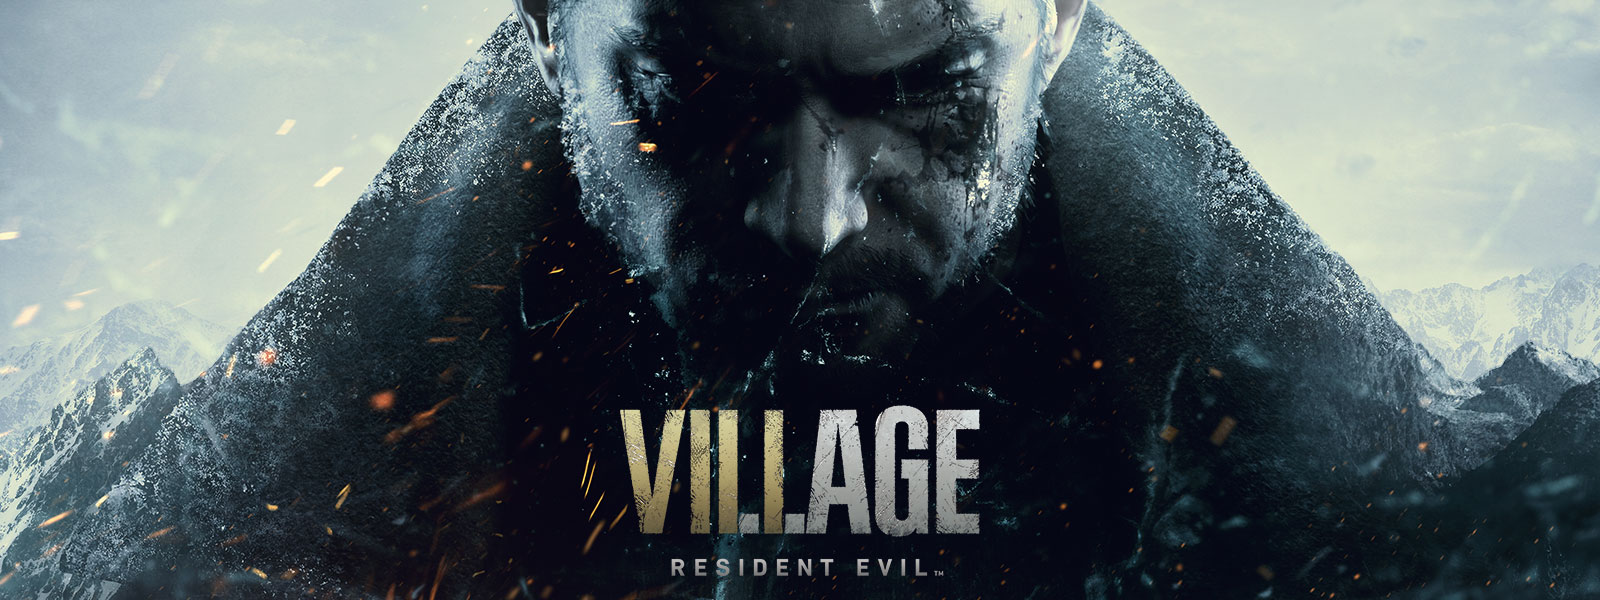 Resident Evil Village, το σκοτεινό πρόσωπο του Chris Redfield δίπλα σε ένα βουνό